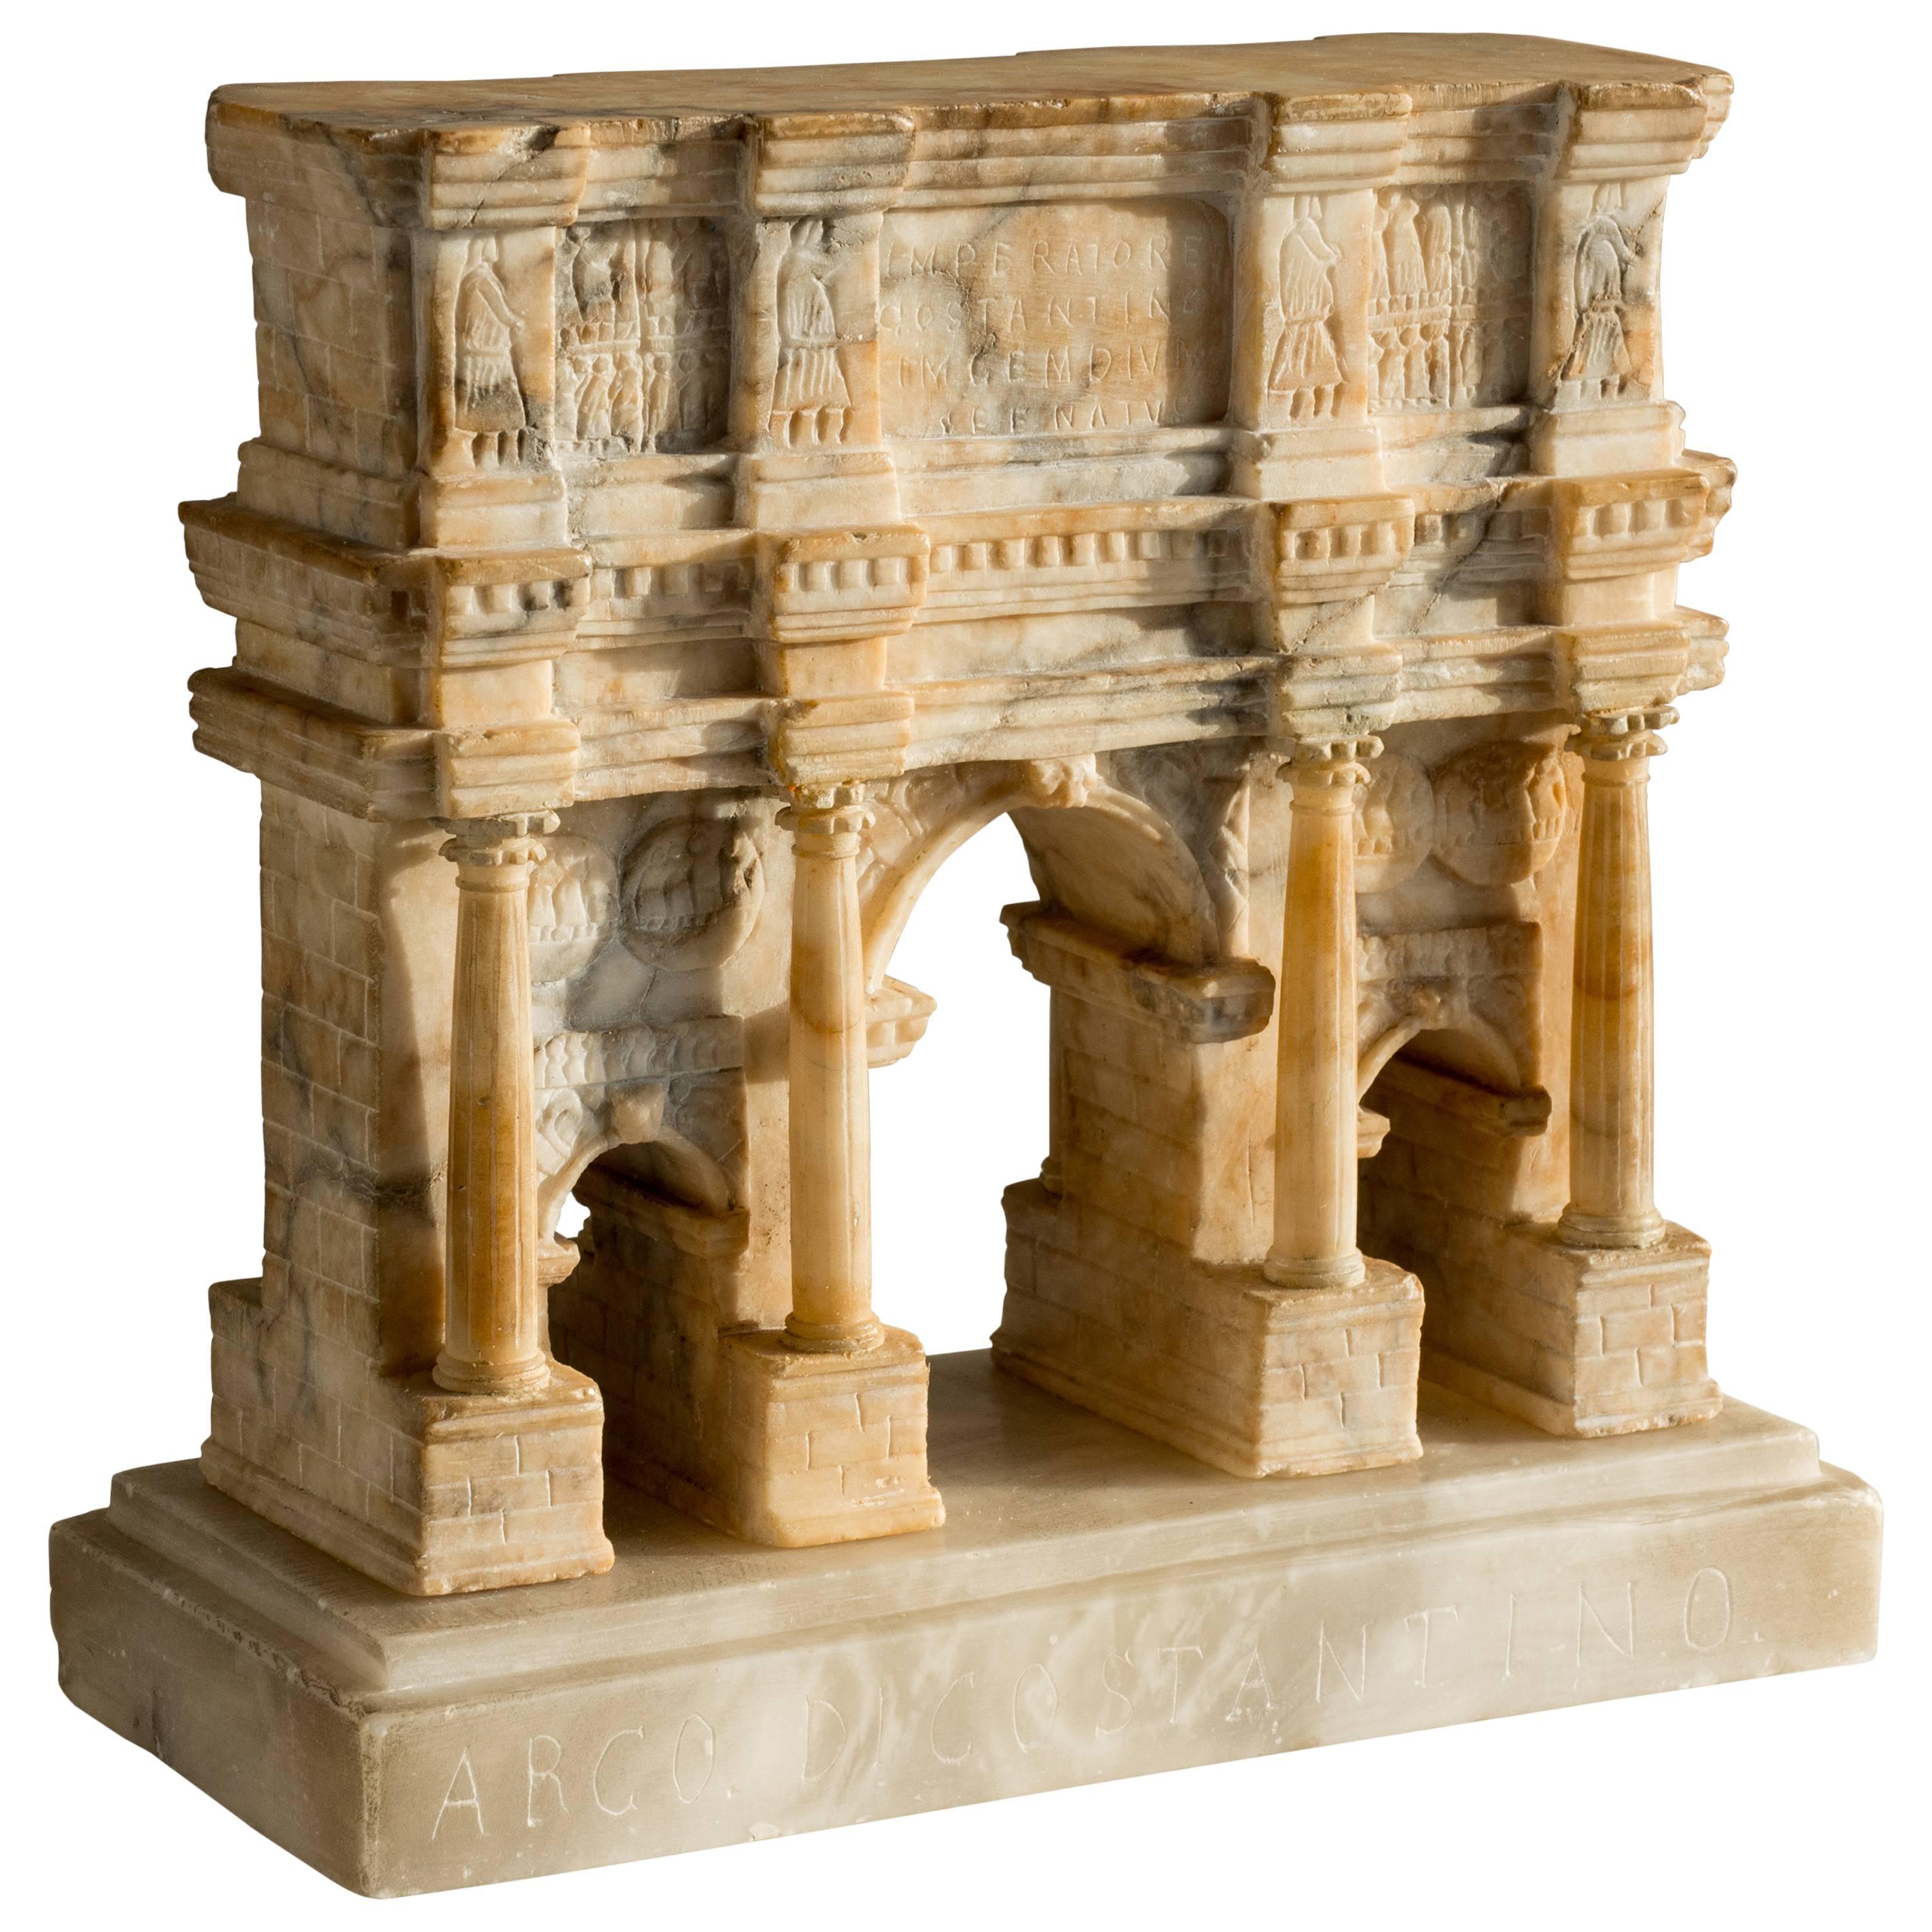 Impressive 19th Century Grand Tour Alabaster Model of Rome's Arch of Constantine